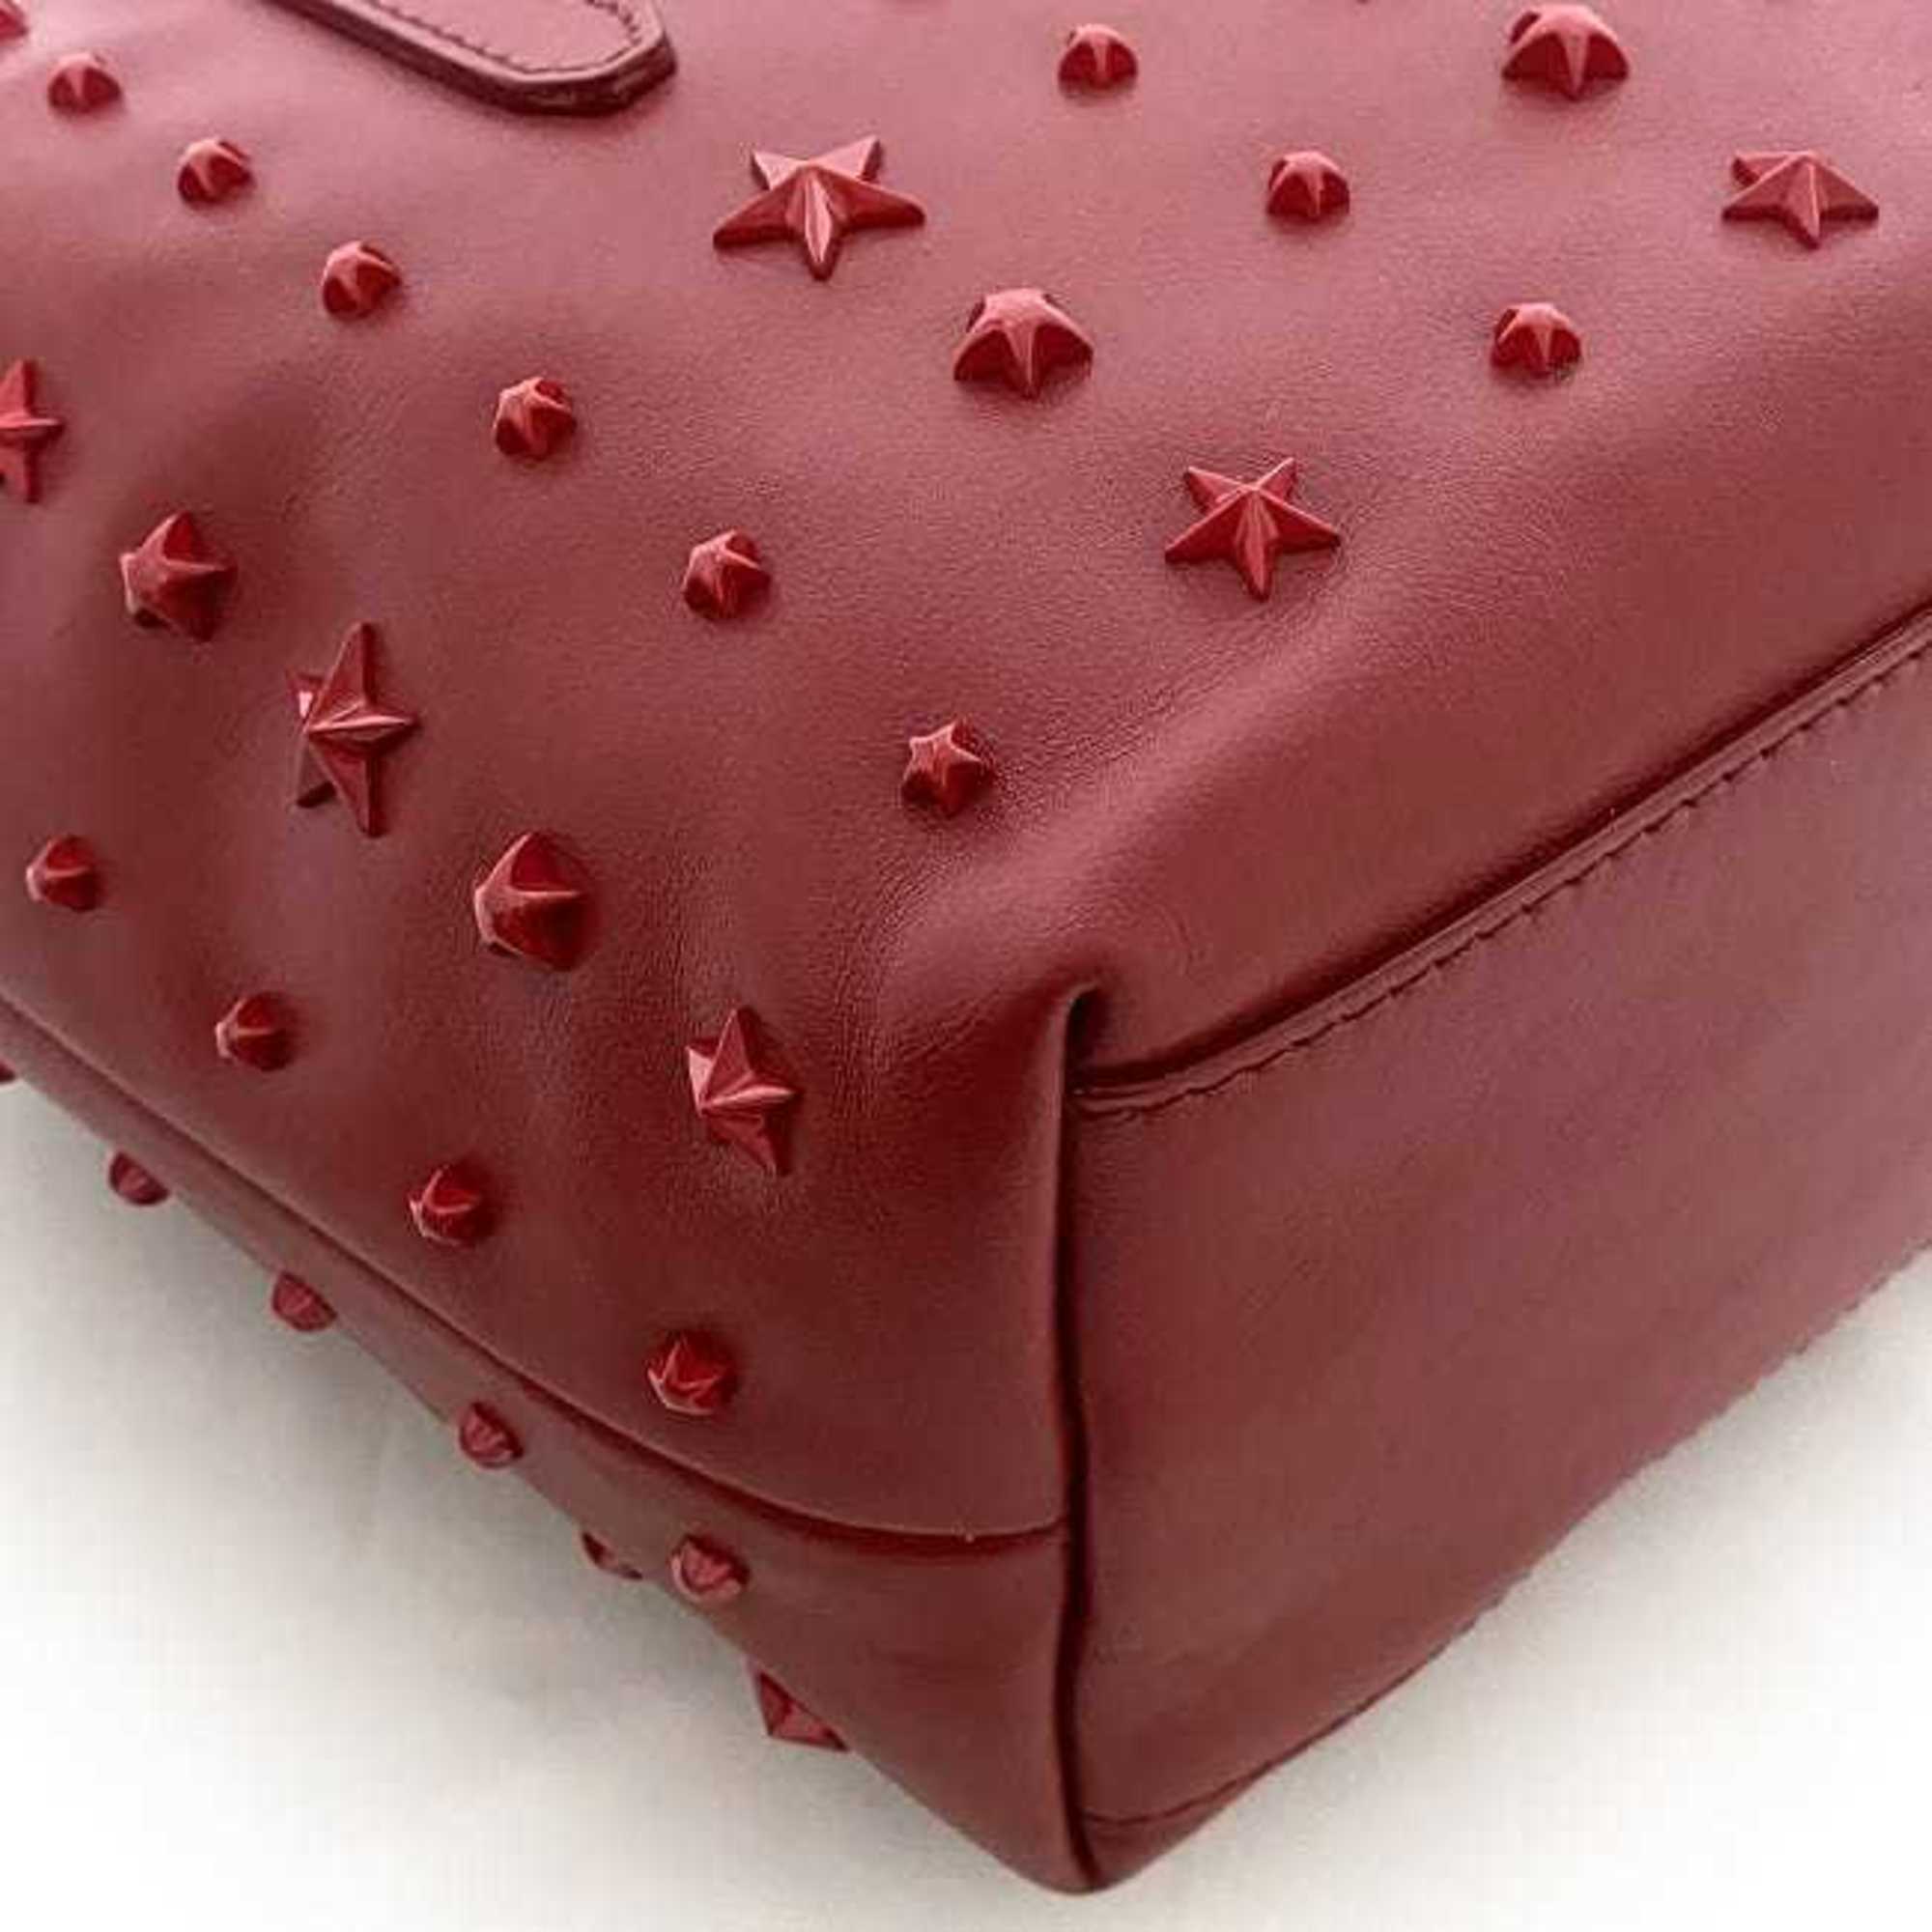 Jimmy Choo 2way Sara Red LTJ 193 Leather JIMMY CHOO Star Studded Handbag Shoulder Bag